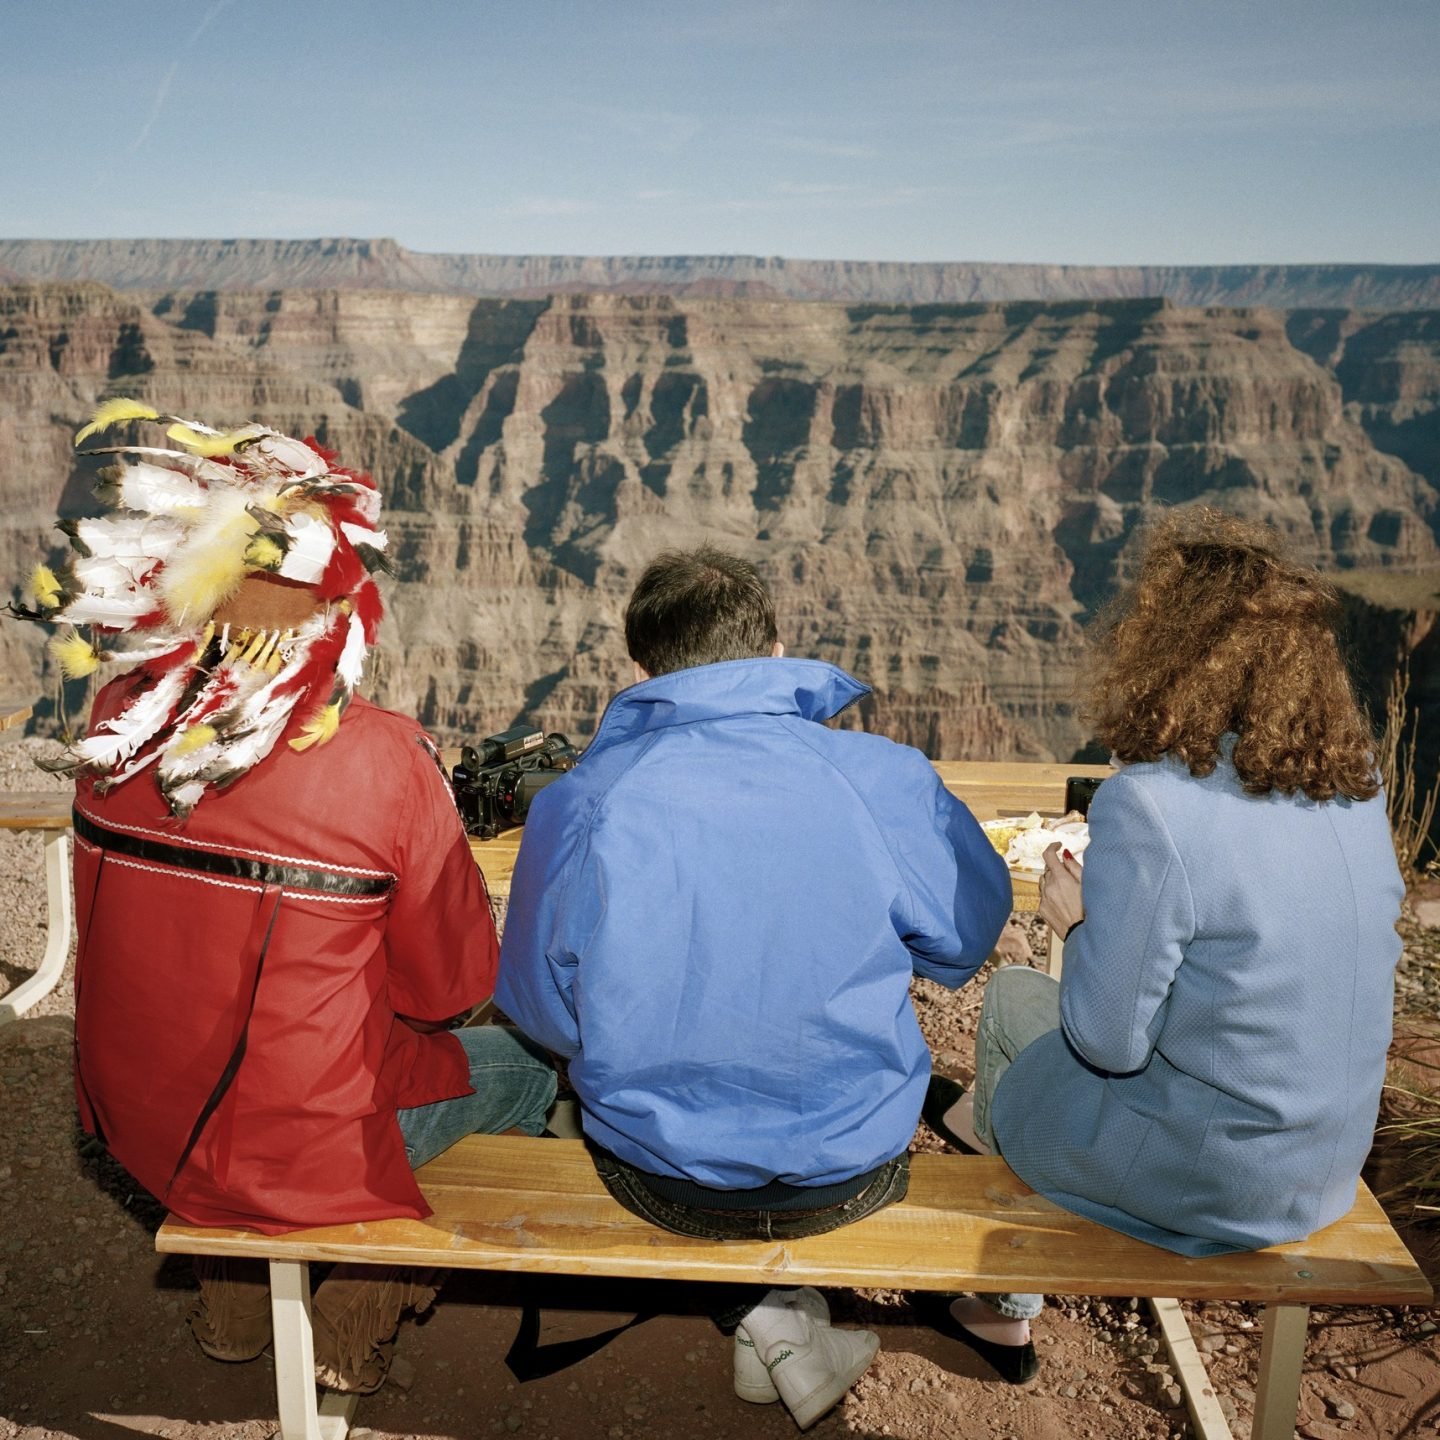 USA. Arizona. The Grand Canyon. 1994.